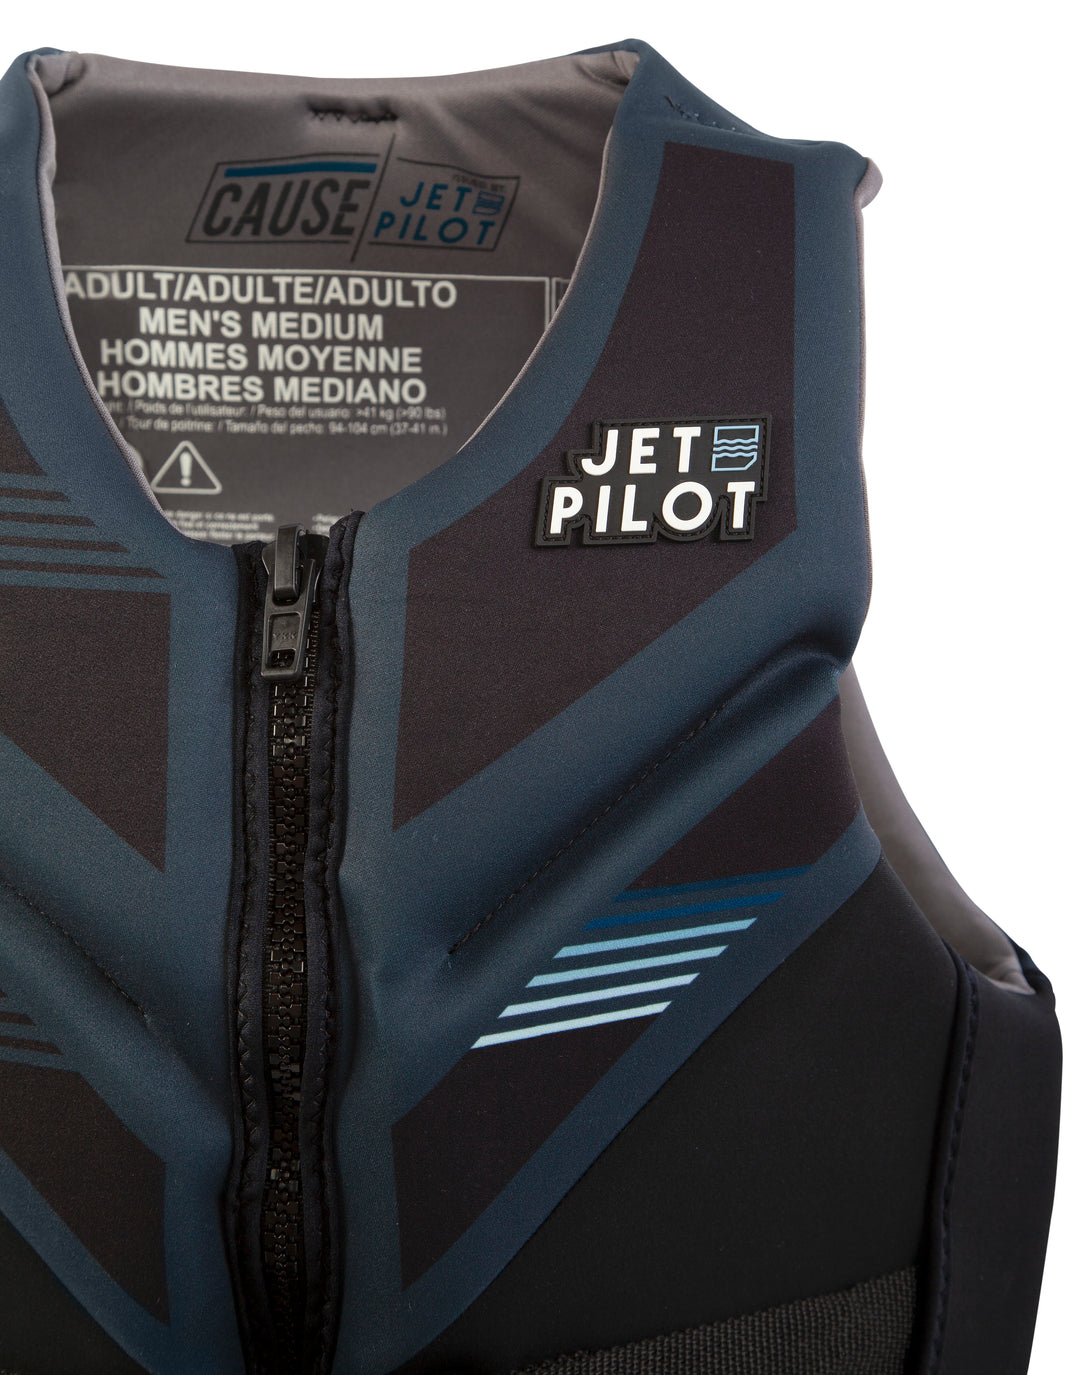 Jetpilot Cause Neoprene Coast Guard Approved Life Vest – JETPILOT